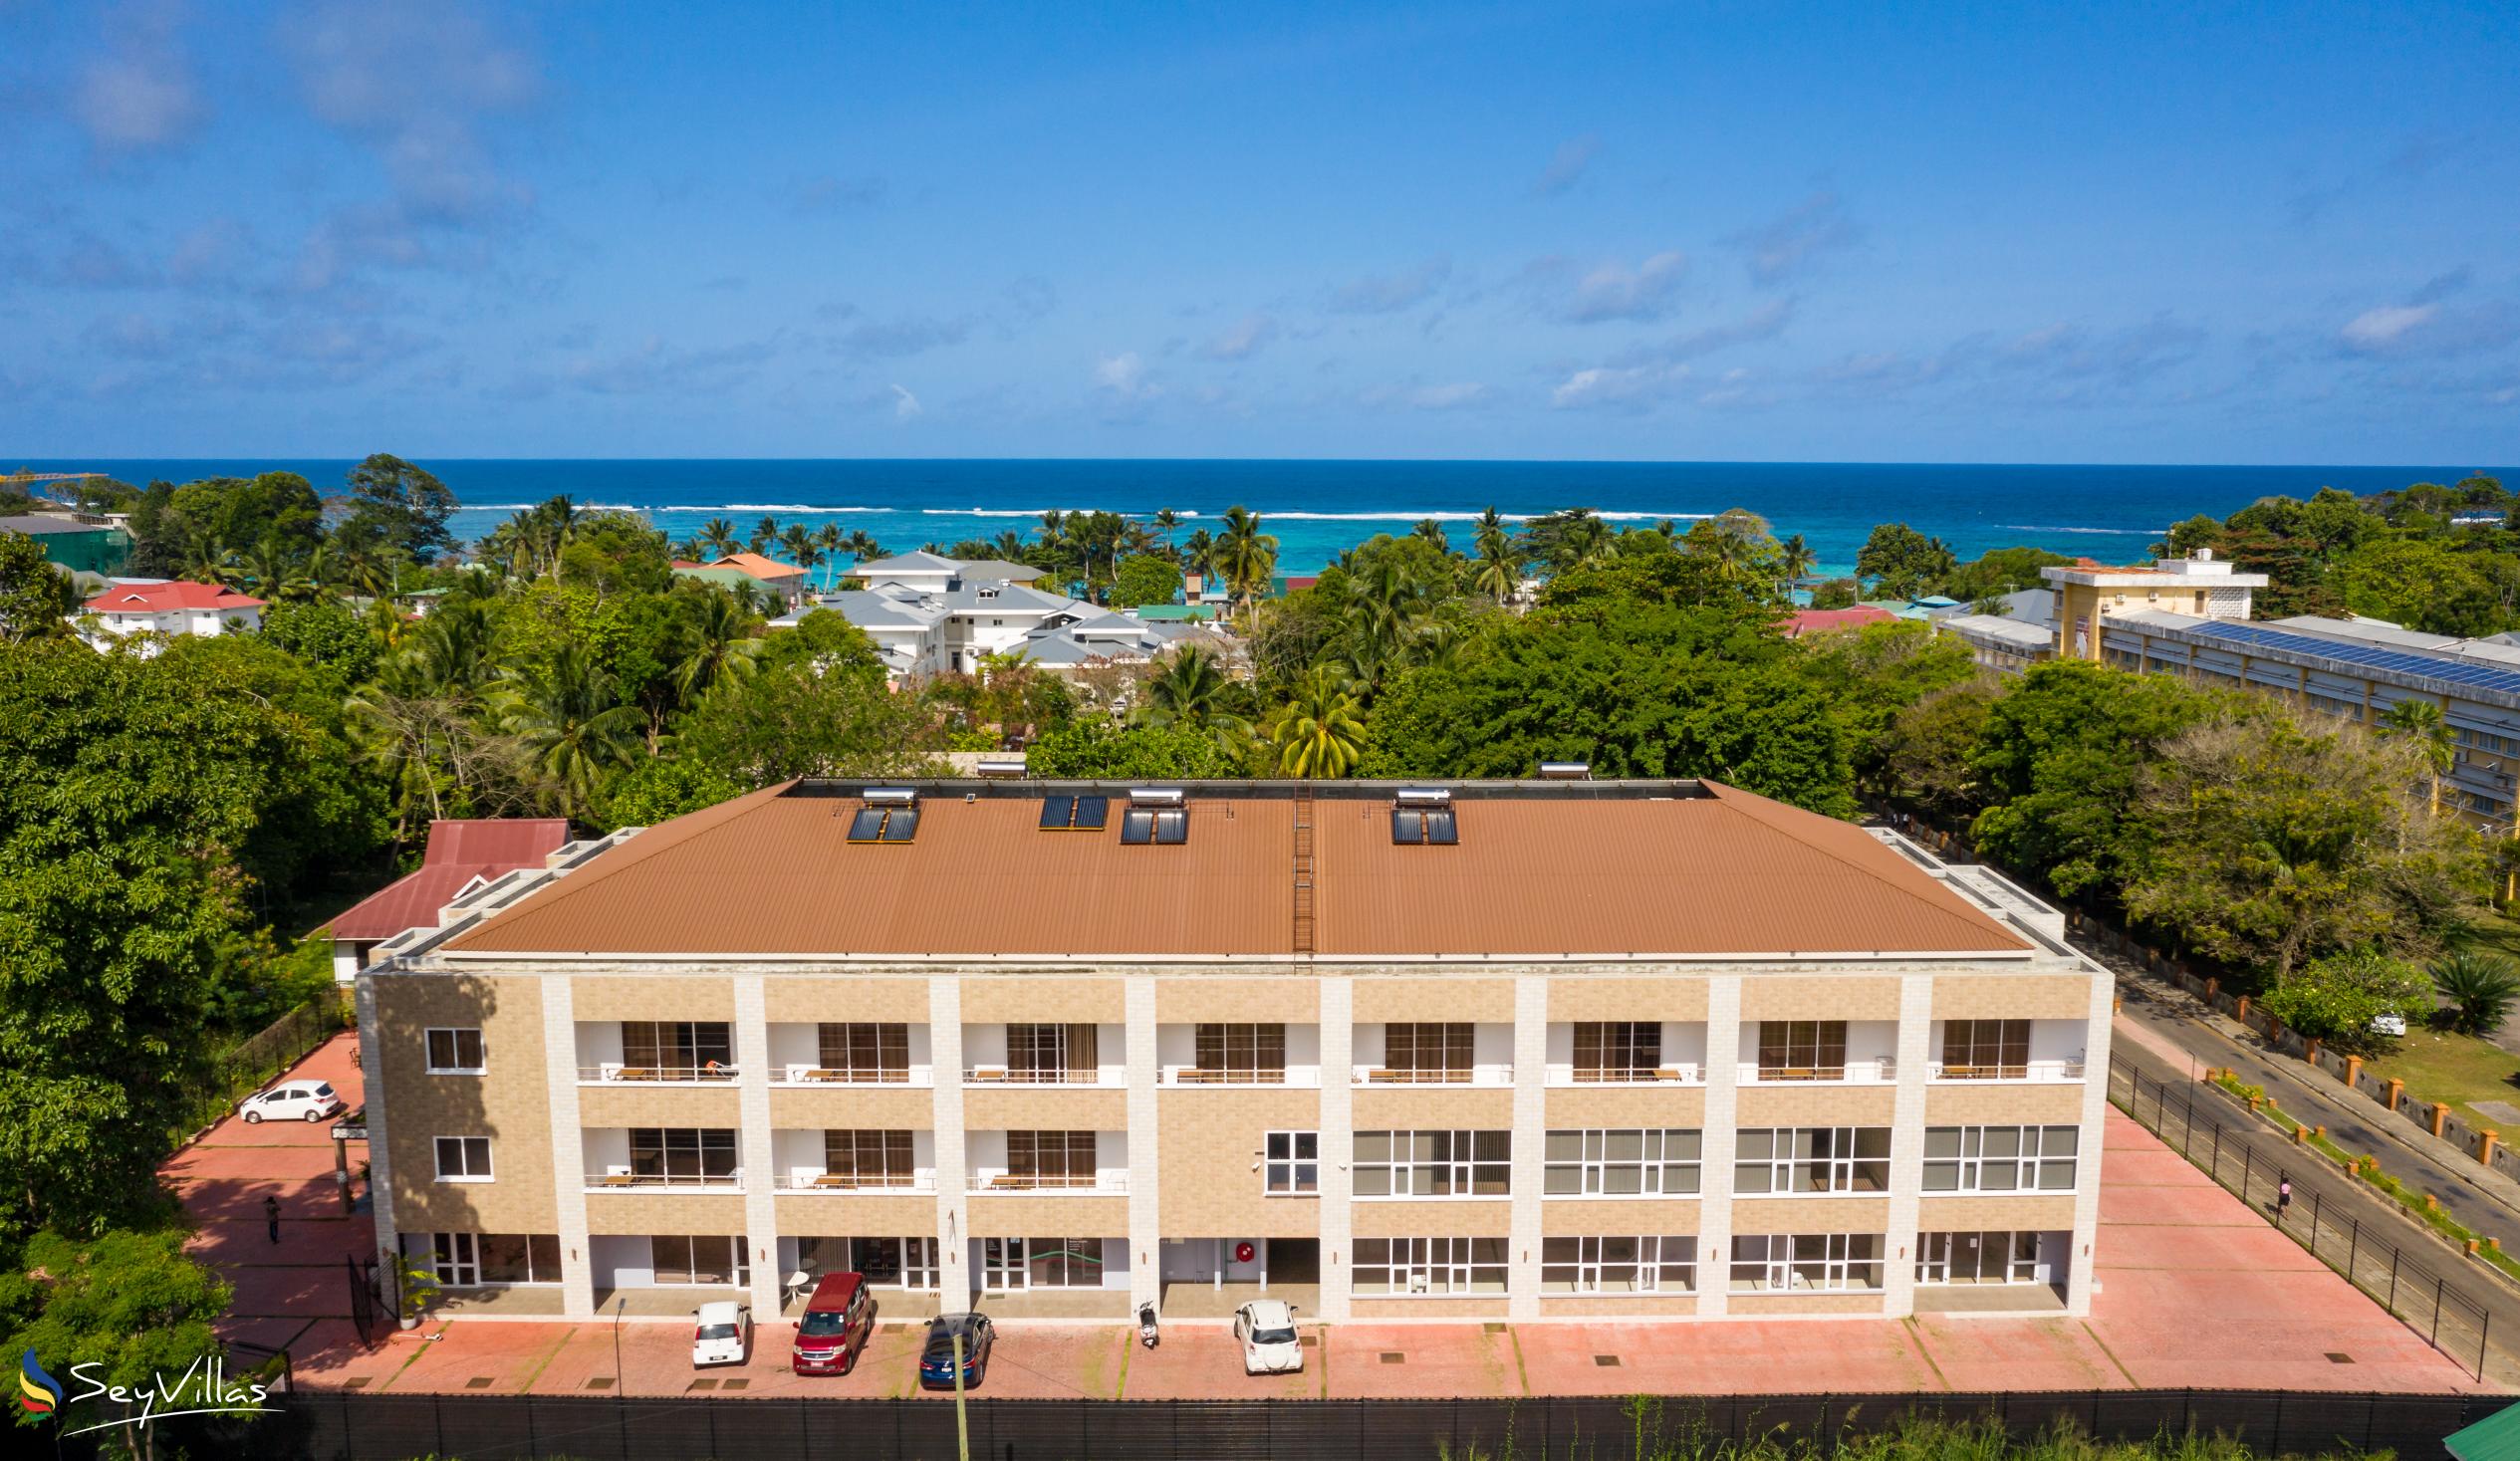 Photo 2: Royale Suites by Arc Royale Luxury Apartments - Outdoor area - Mahé (Seychelles)